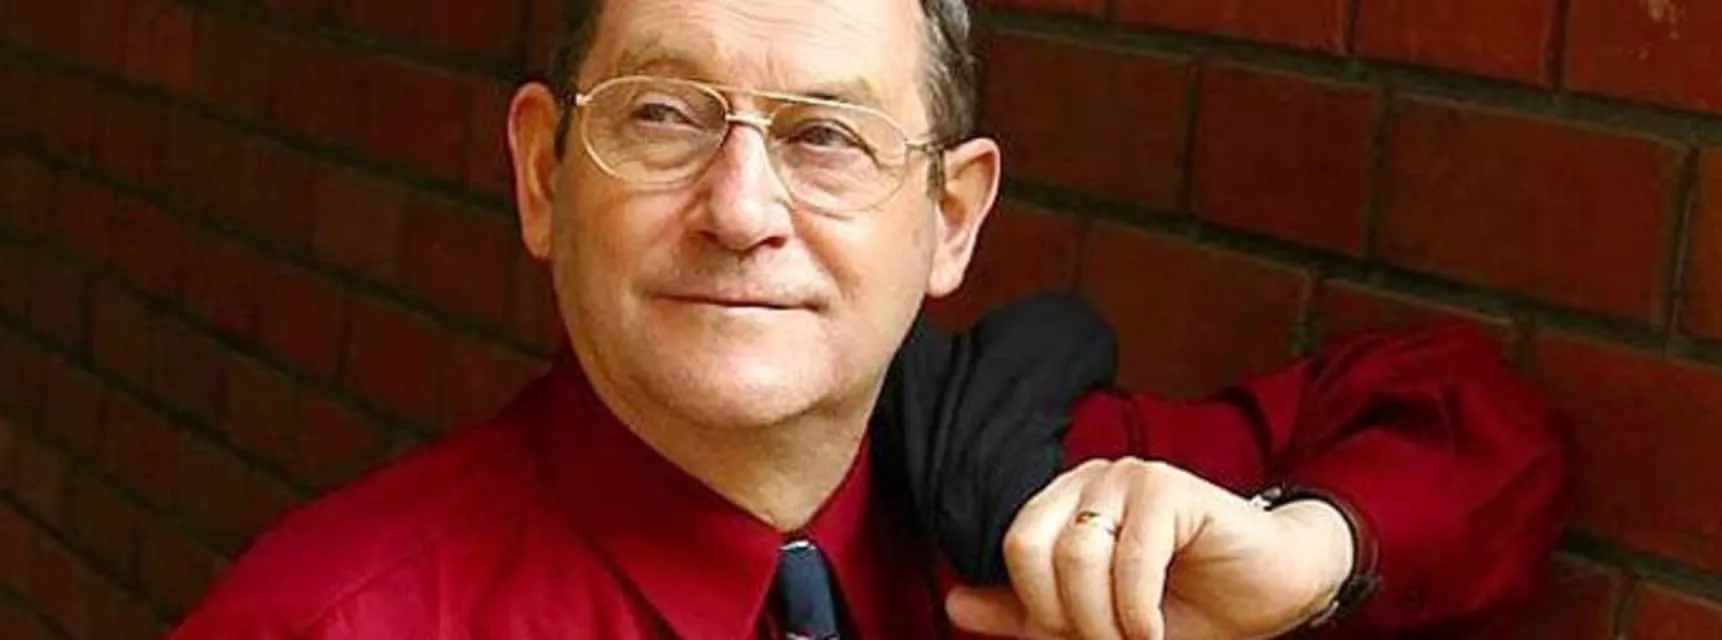 Norman Davies - Historian